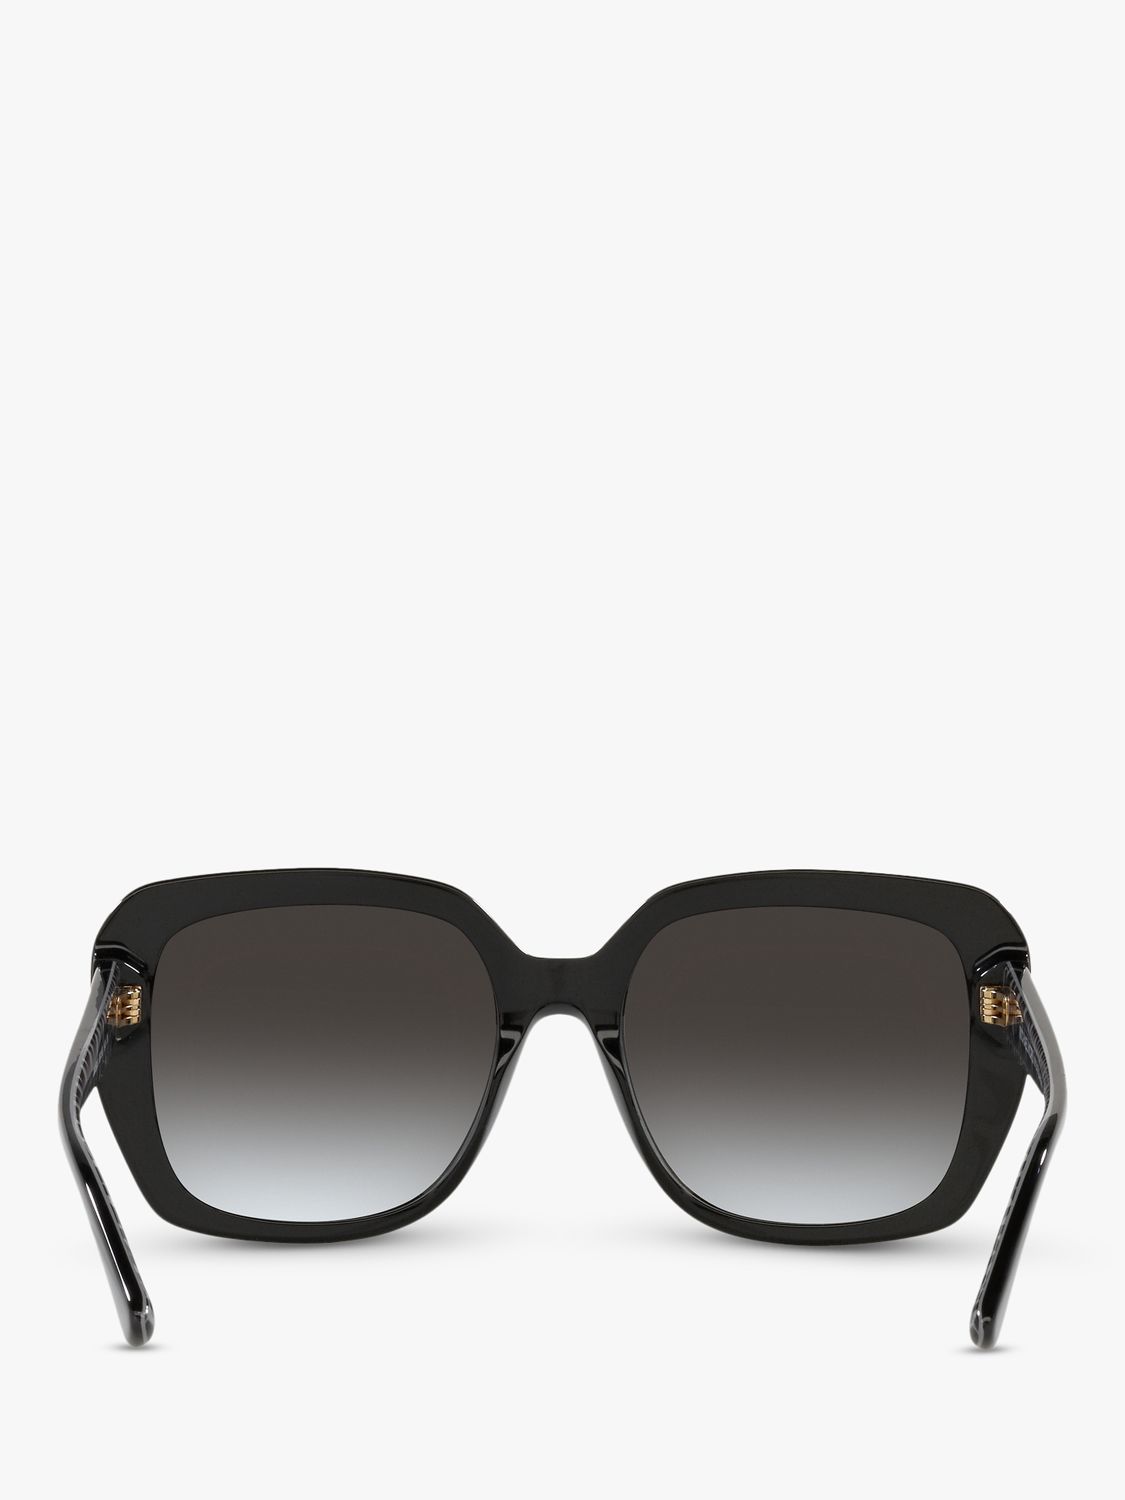 Michael Kors MK2140 Women's Manhasset Square Sunglasses, Black/Grey Gradient